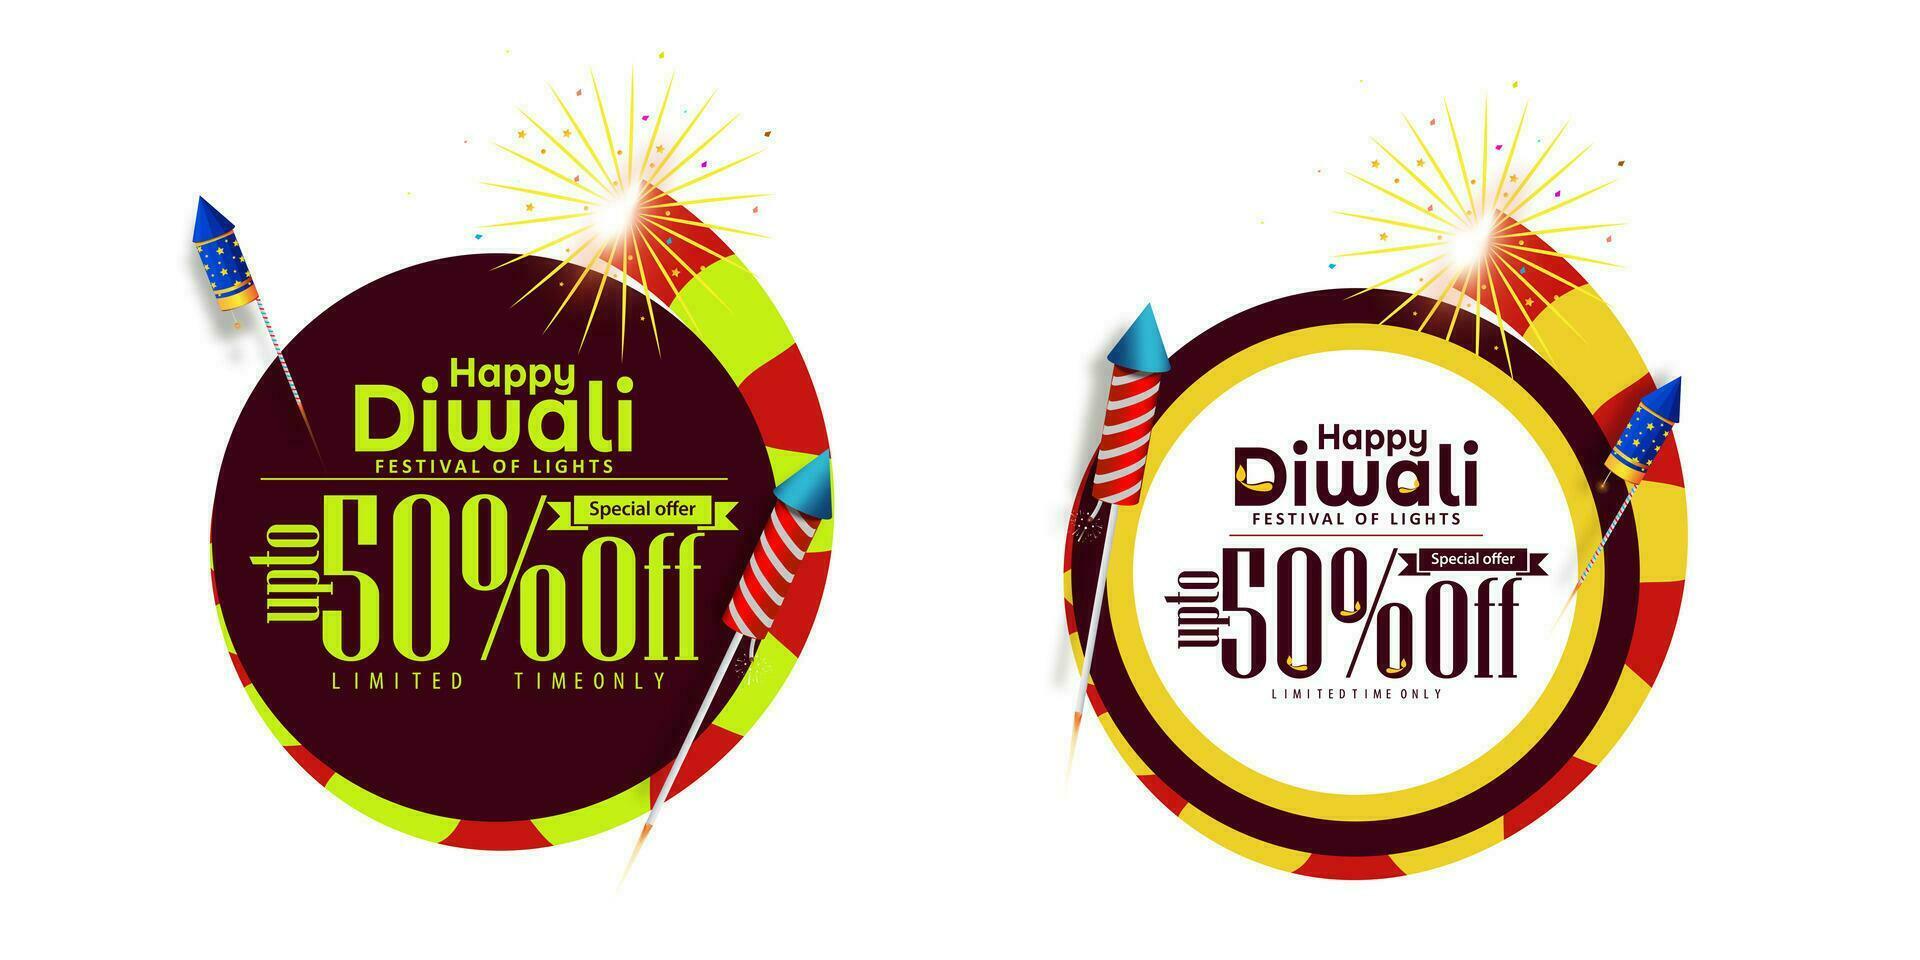 contento diwali festival de luces celebracion rebaja bandera modelo diseño. vector